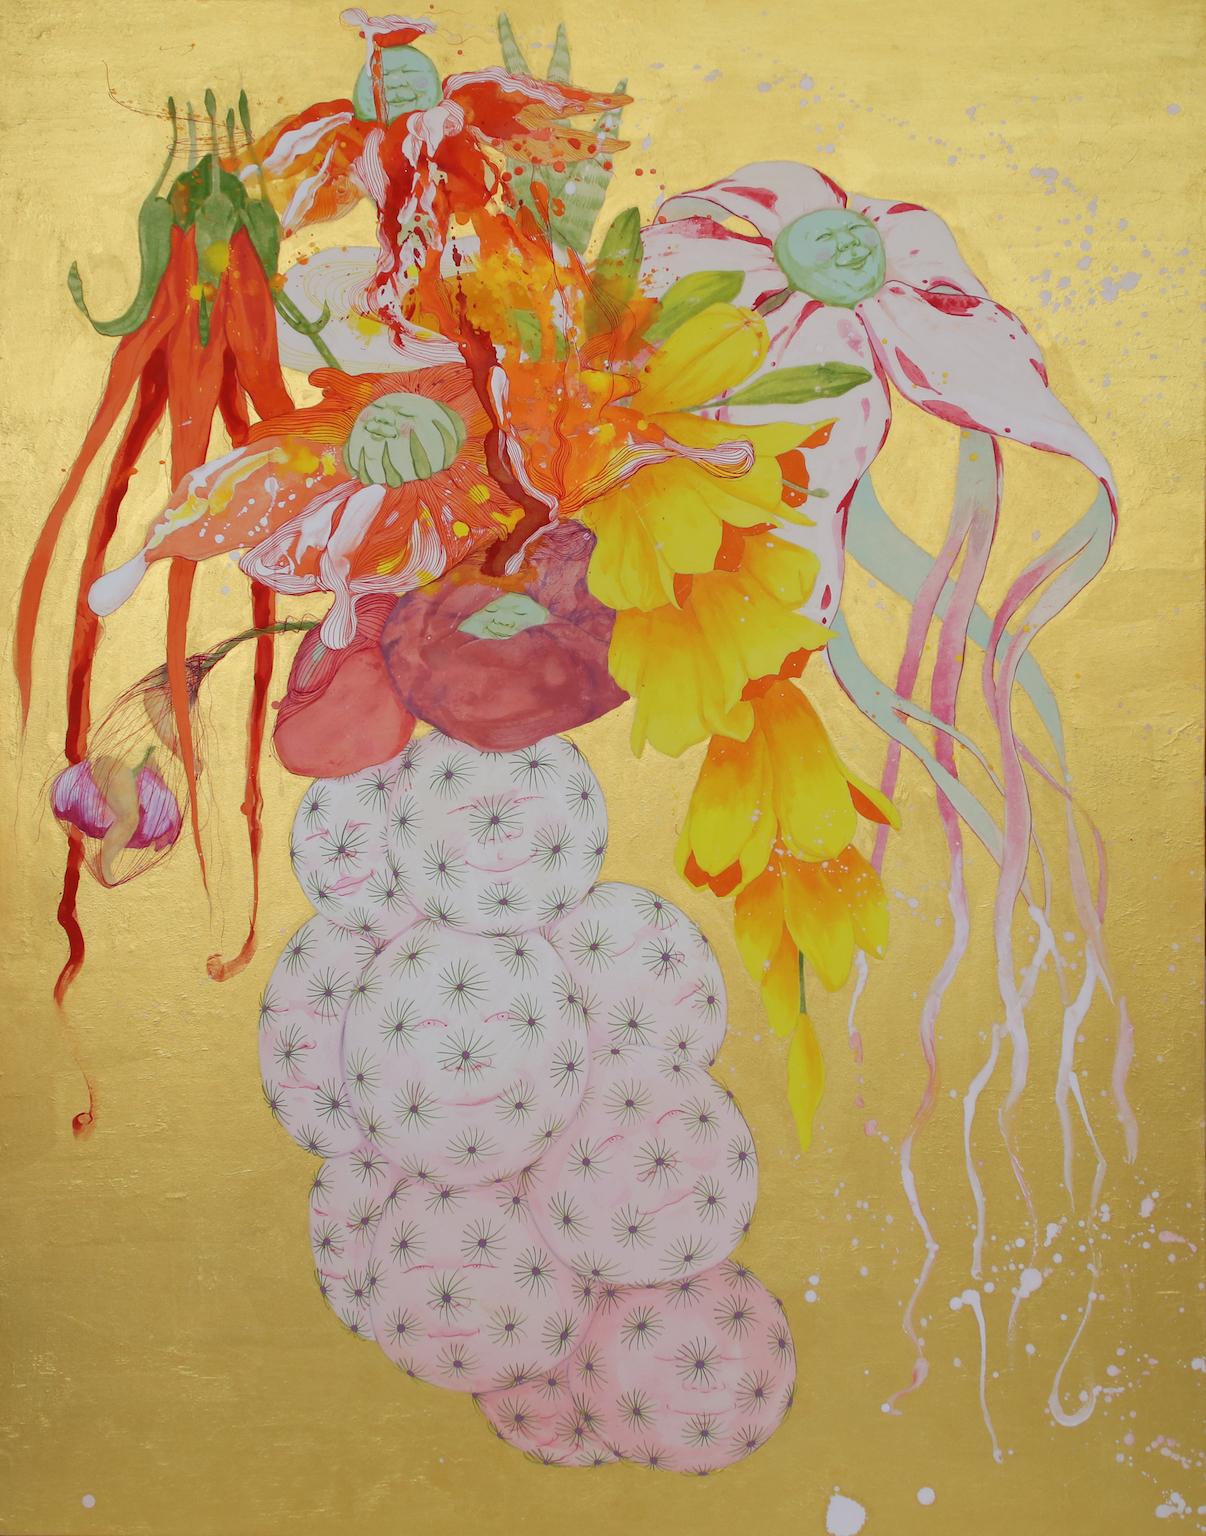 Mari Ito Figurative Print - Transformación del Deseo II - Contemporary, Japanese, Fantasy, Natural Materials